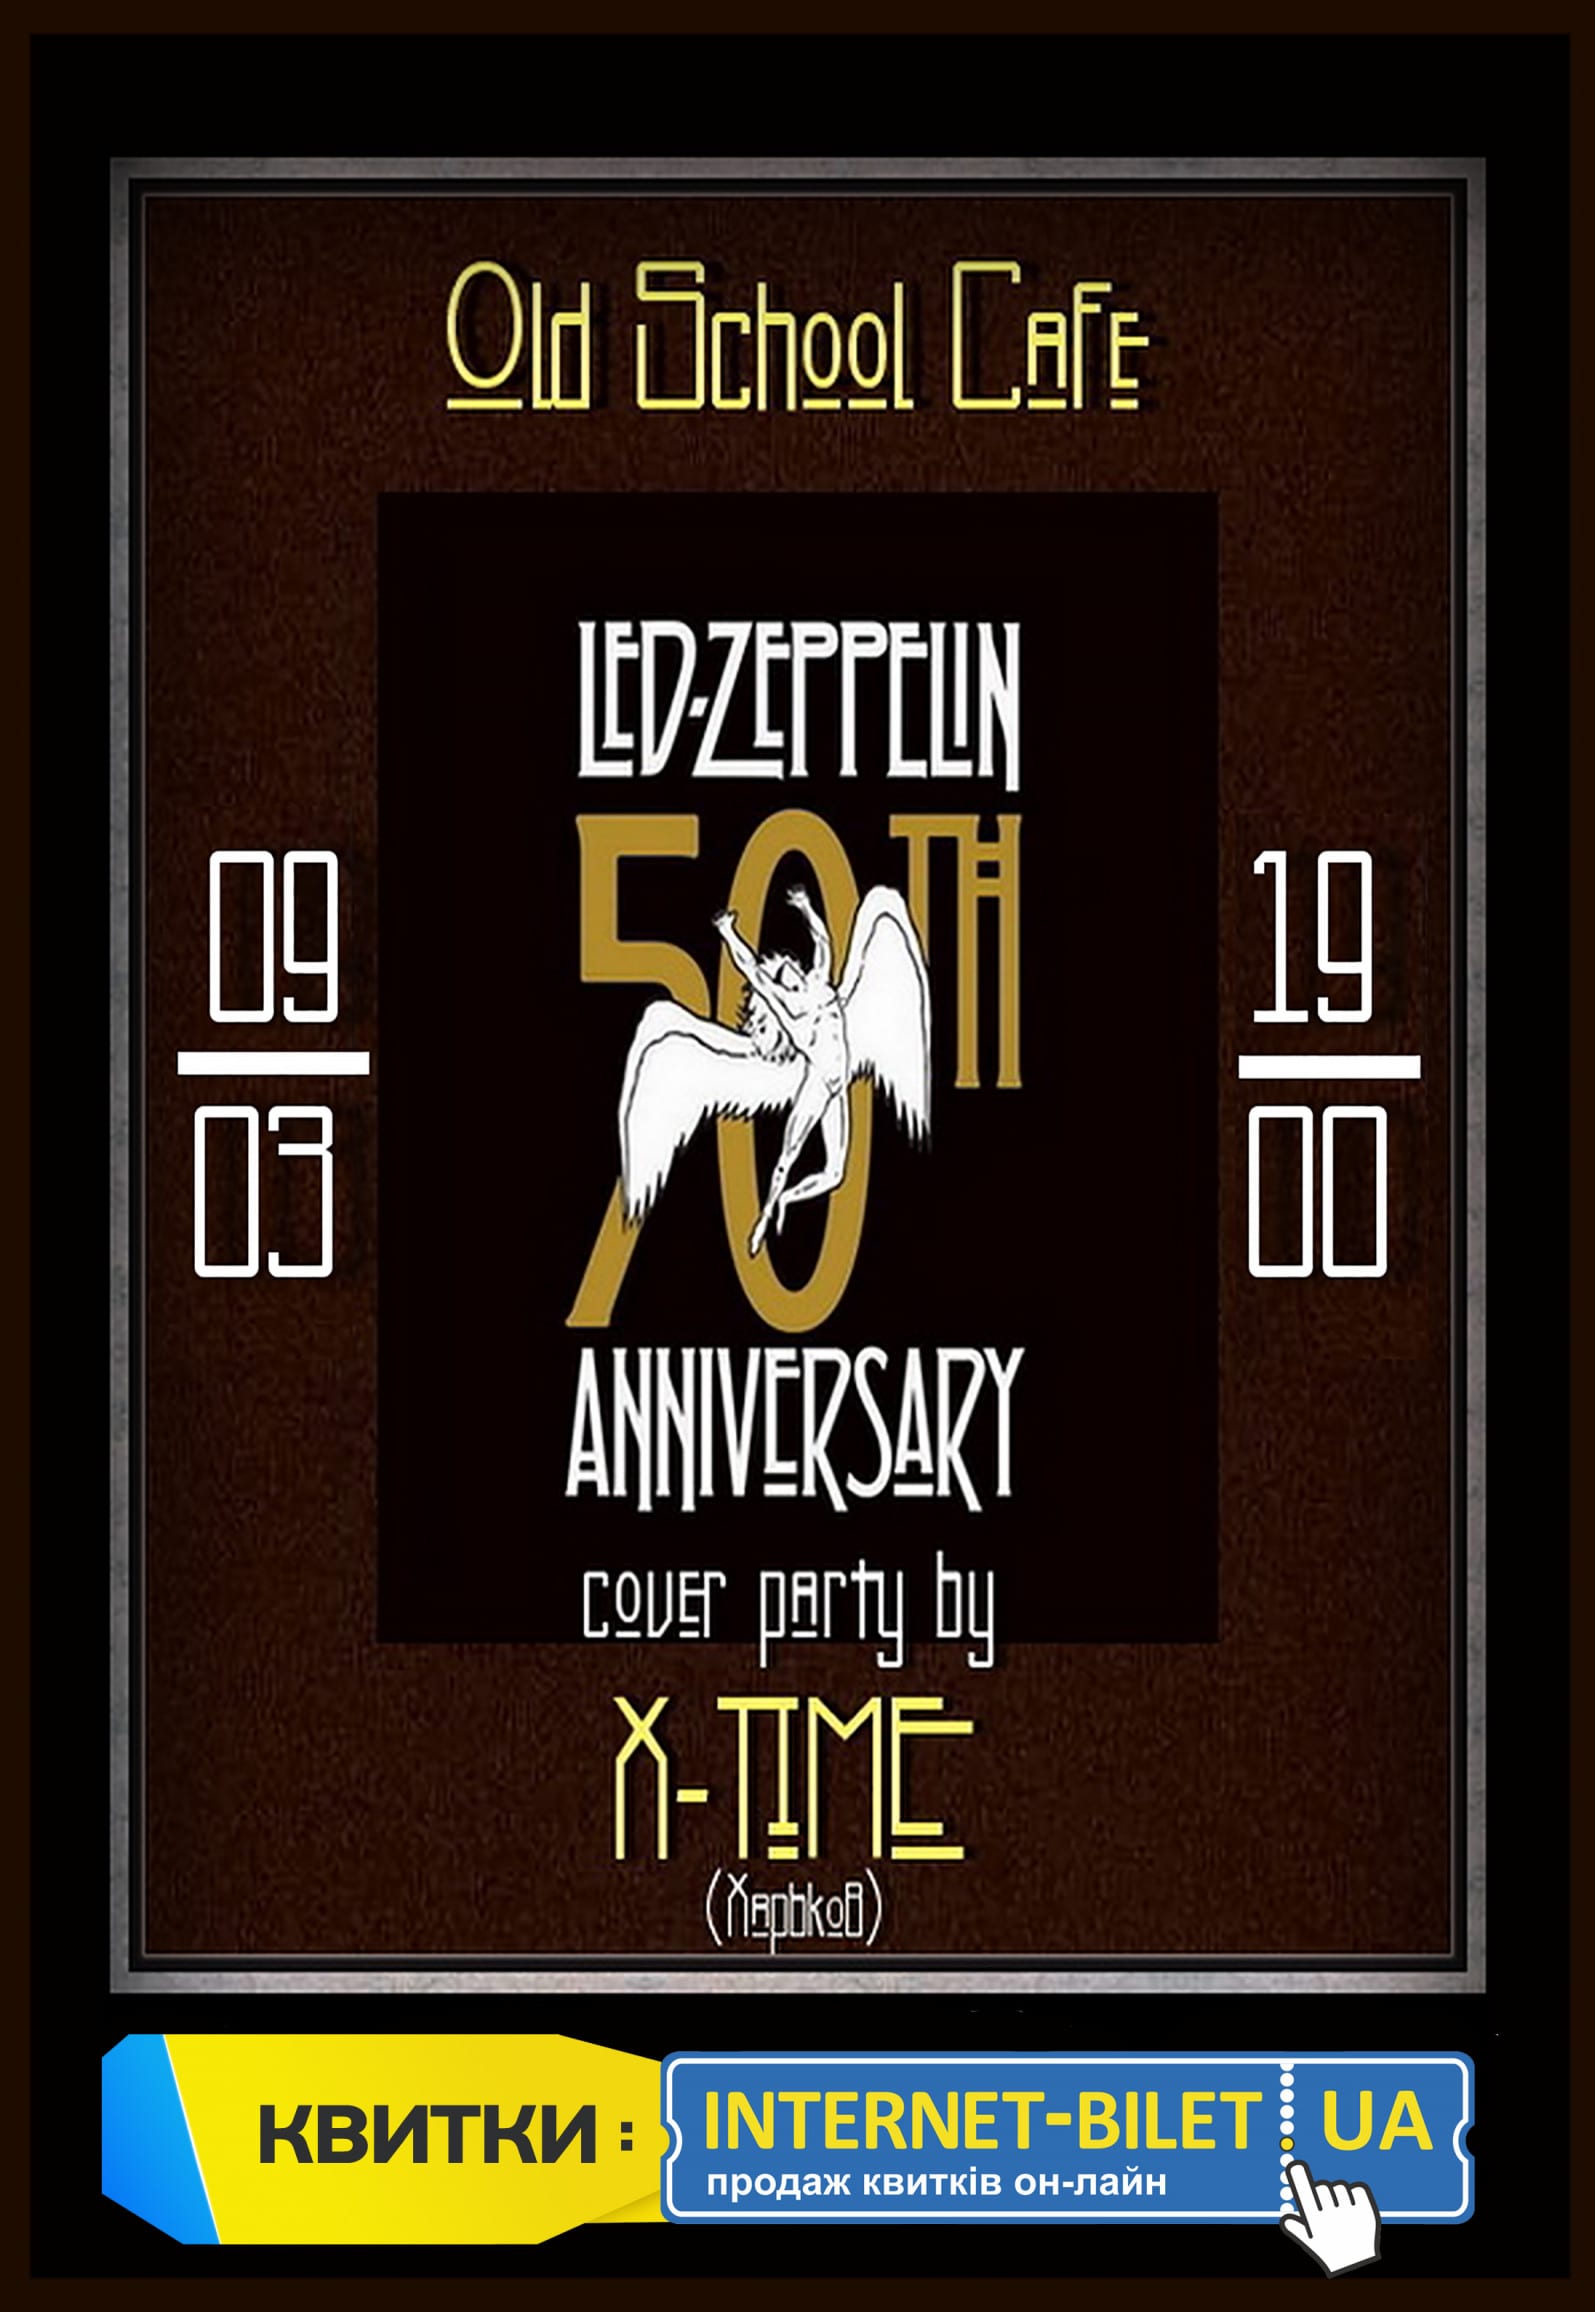 Led Zeppelin cover show Днепр, 9.03.2019, купить билеты. Афиша Днепра